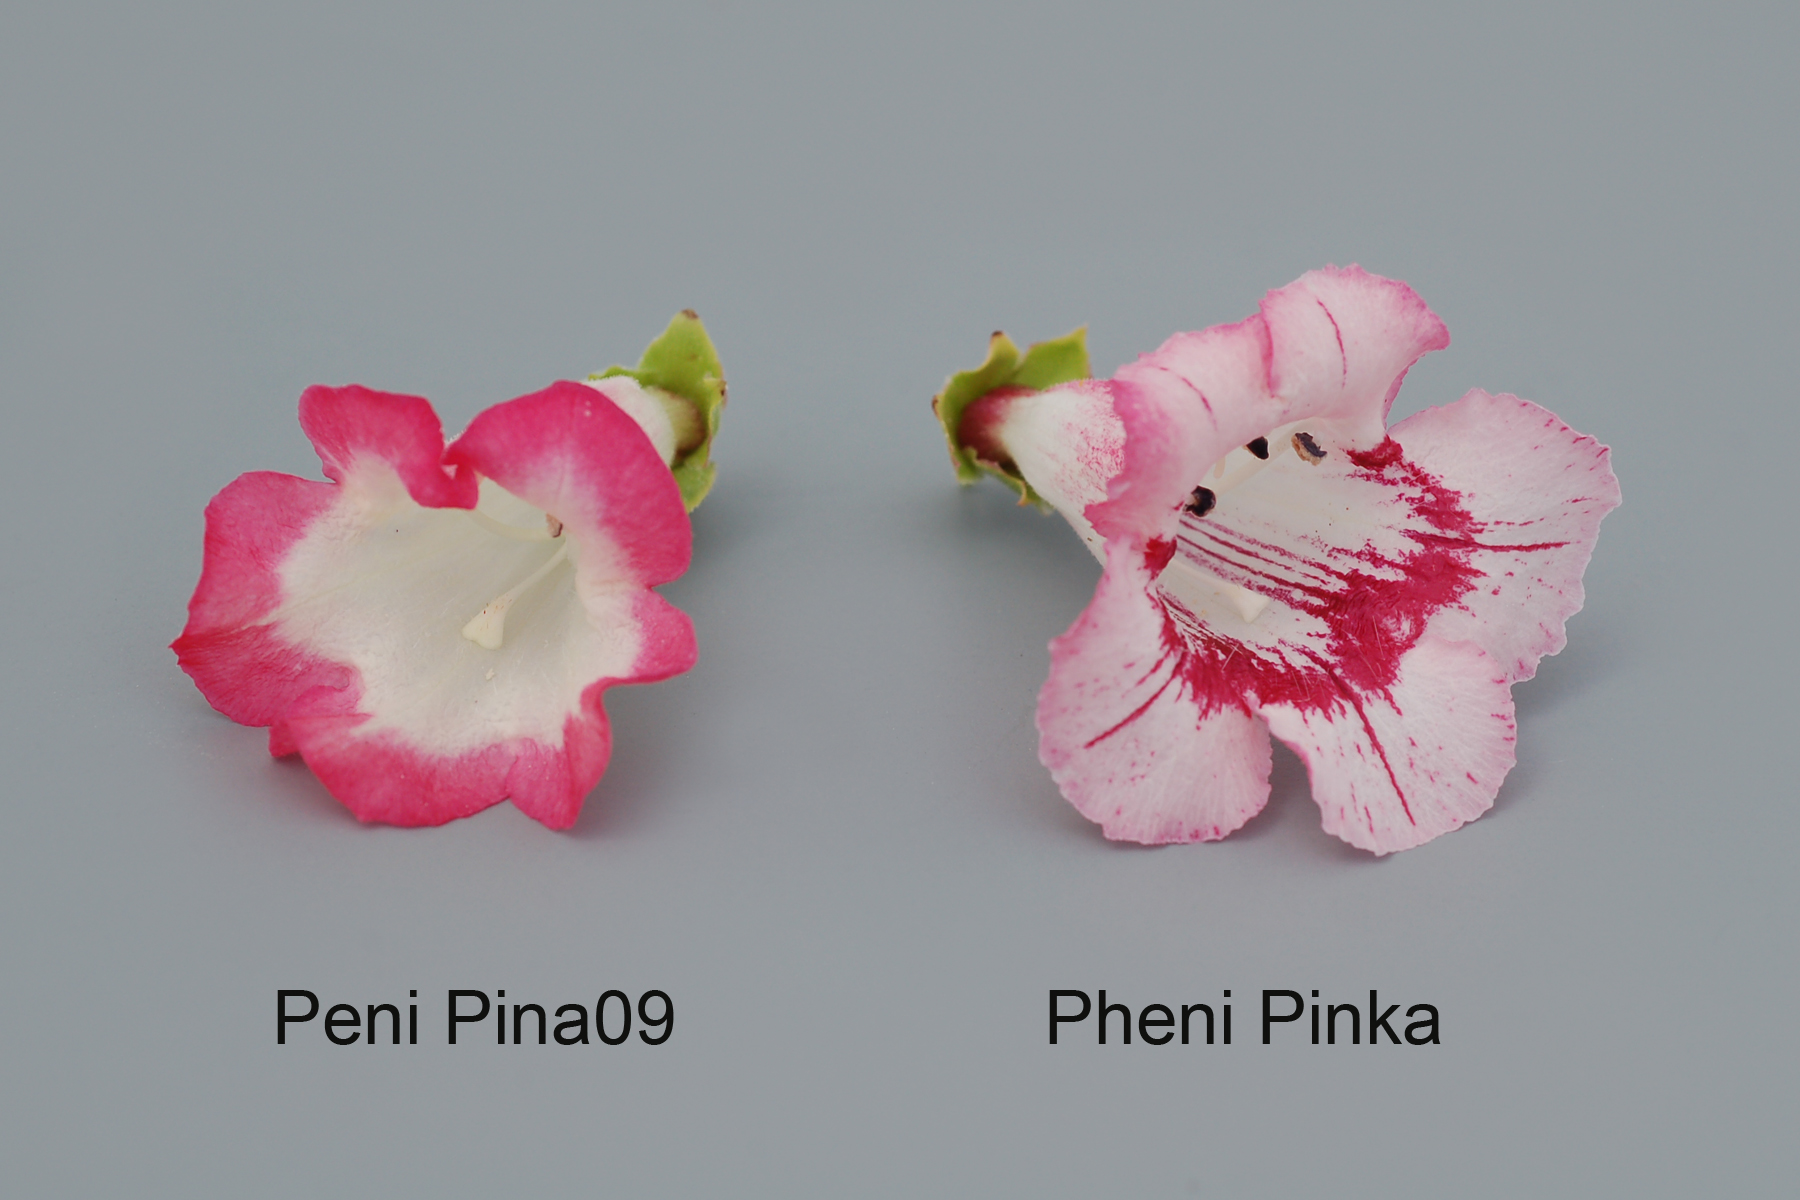 Peni Pina09